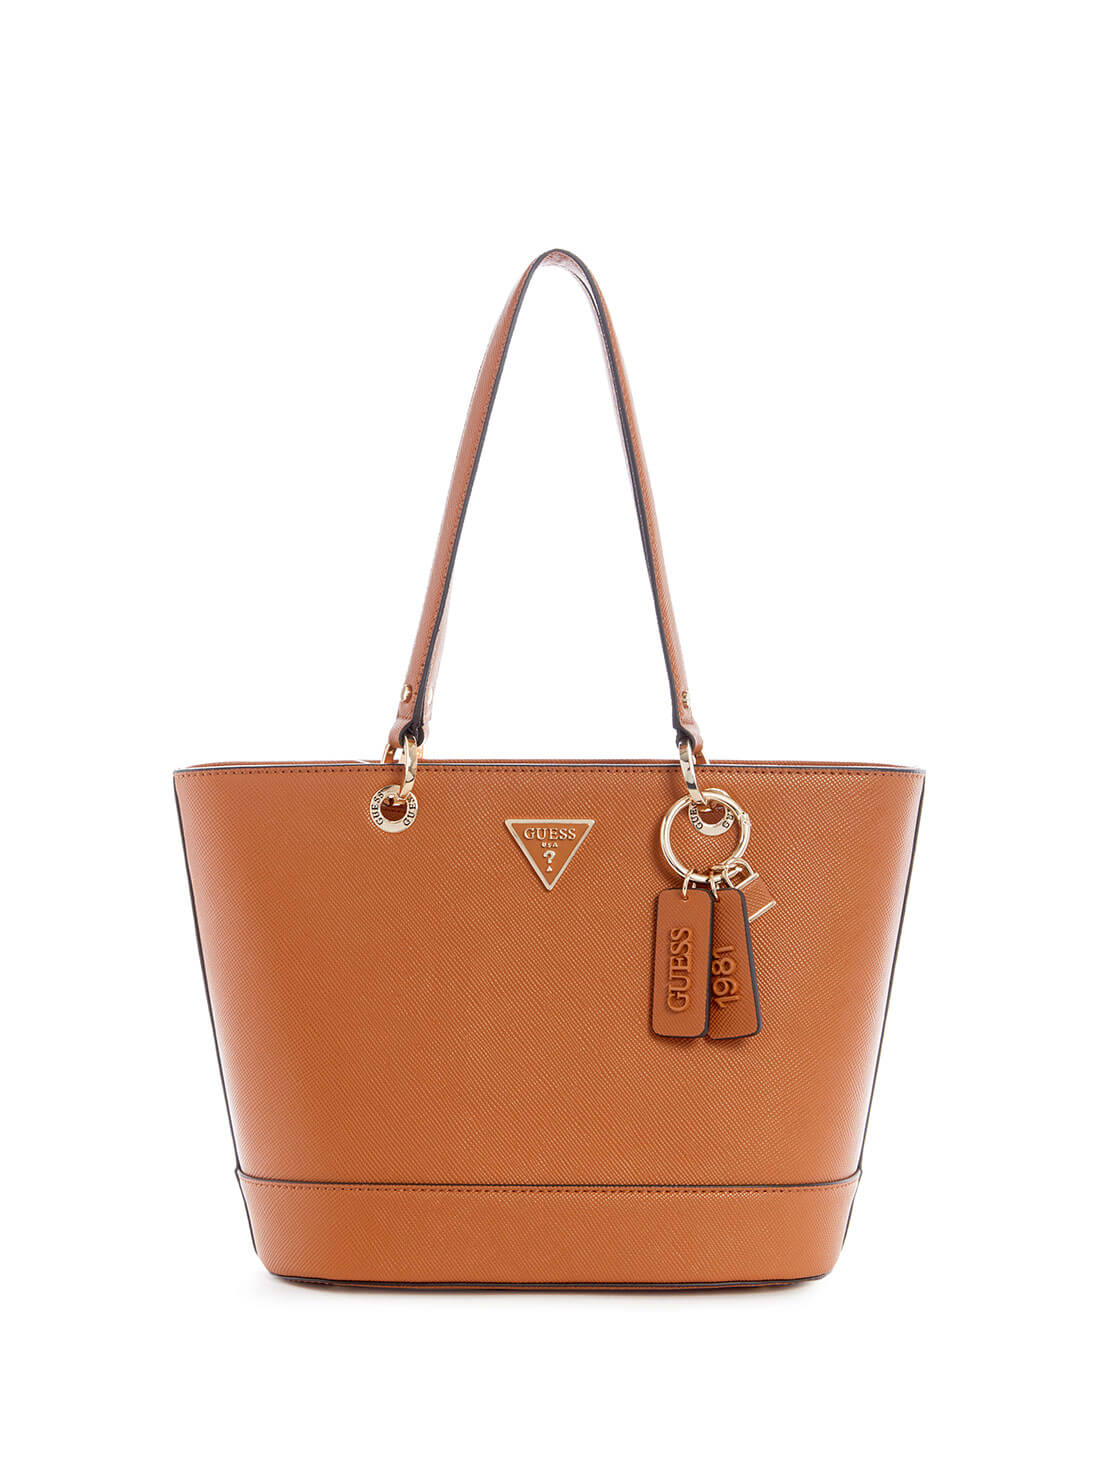 Cognac Brown Noelle Small Elite Tote Bag | GUESS Women's Handbags | front view